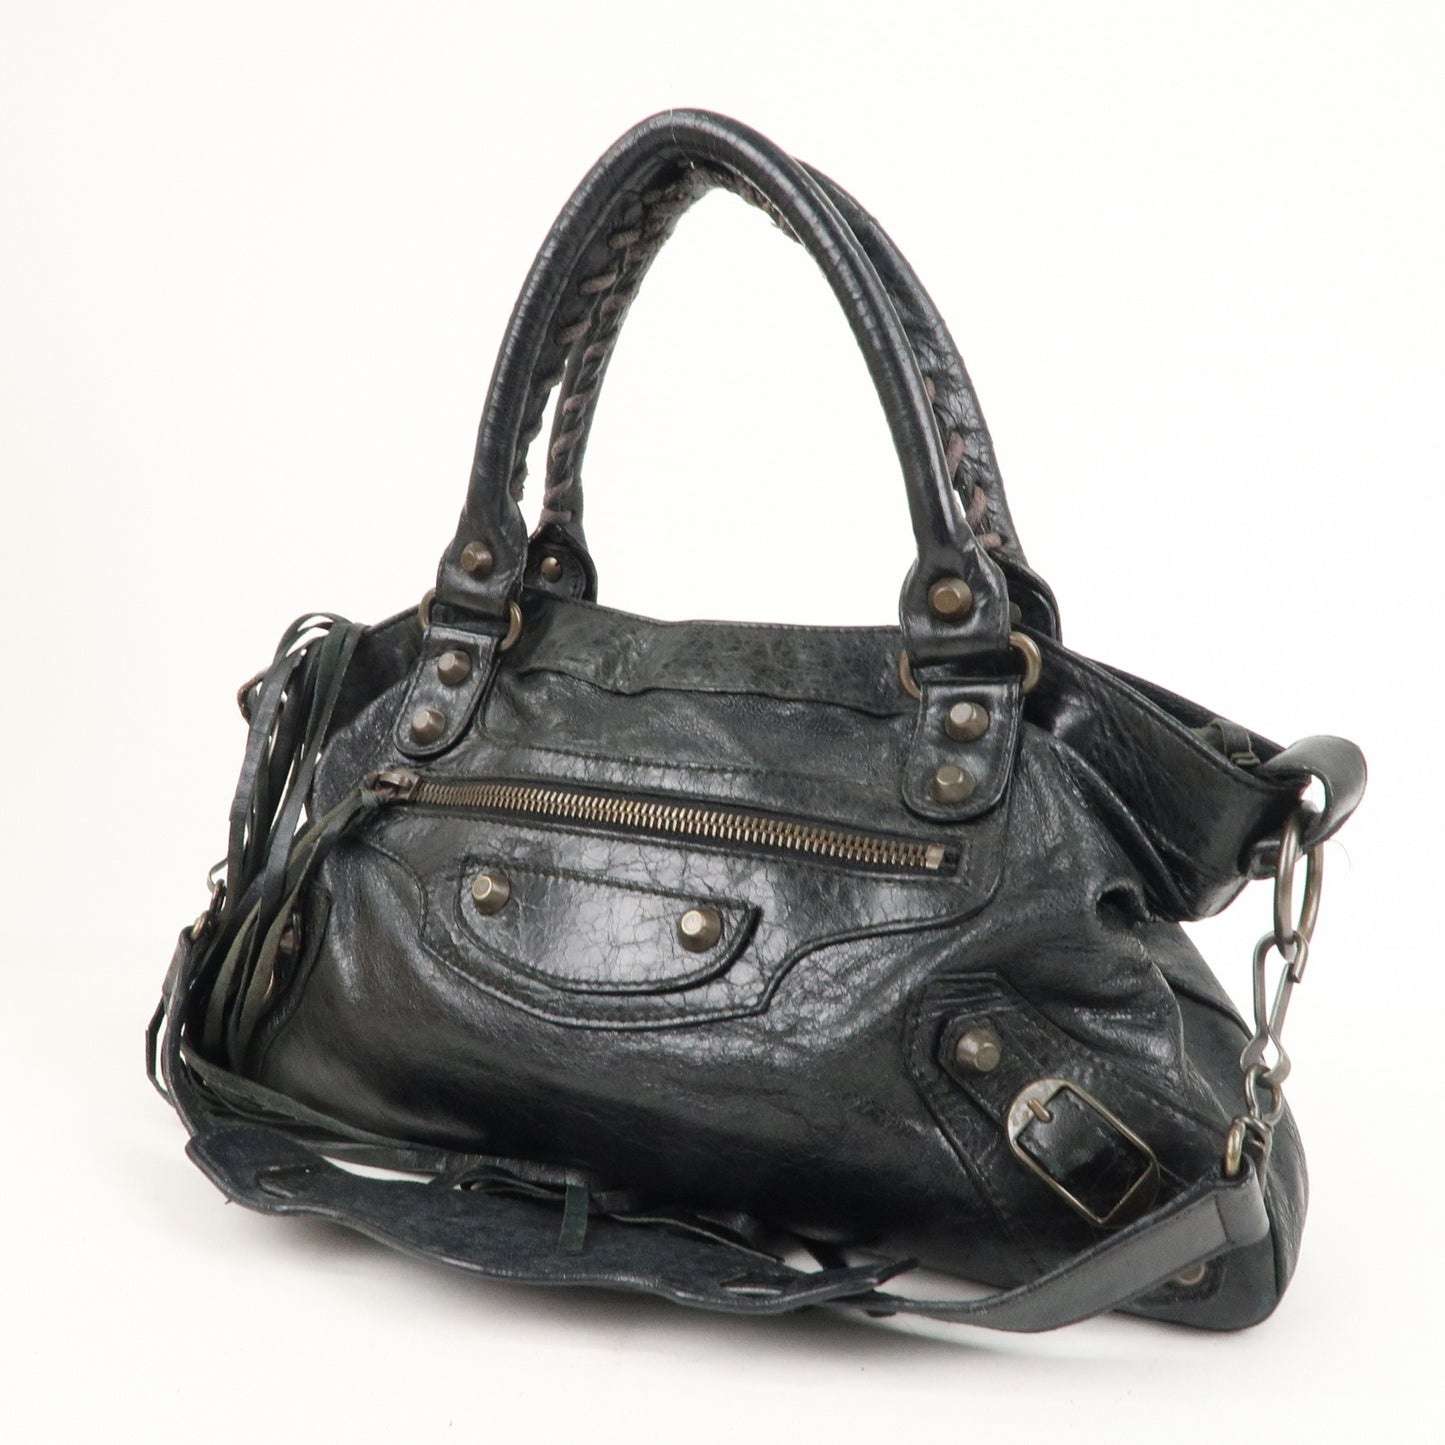 BALENCIAGA-The-City-Leather-2Way-Hand-Bag-Black-115748 – dct